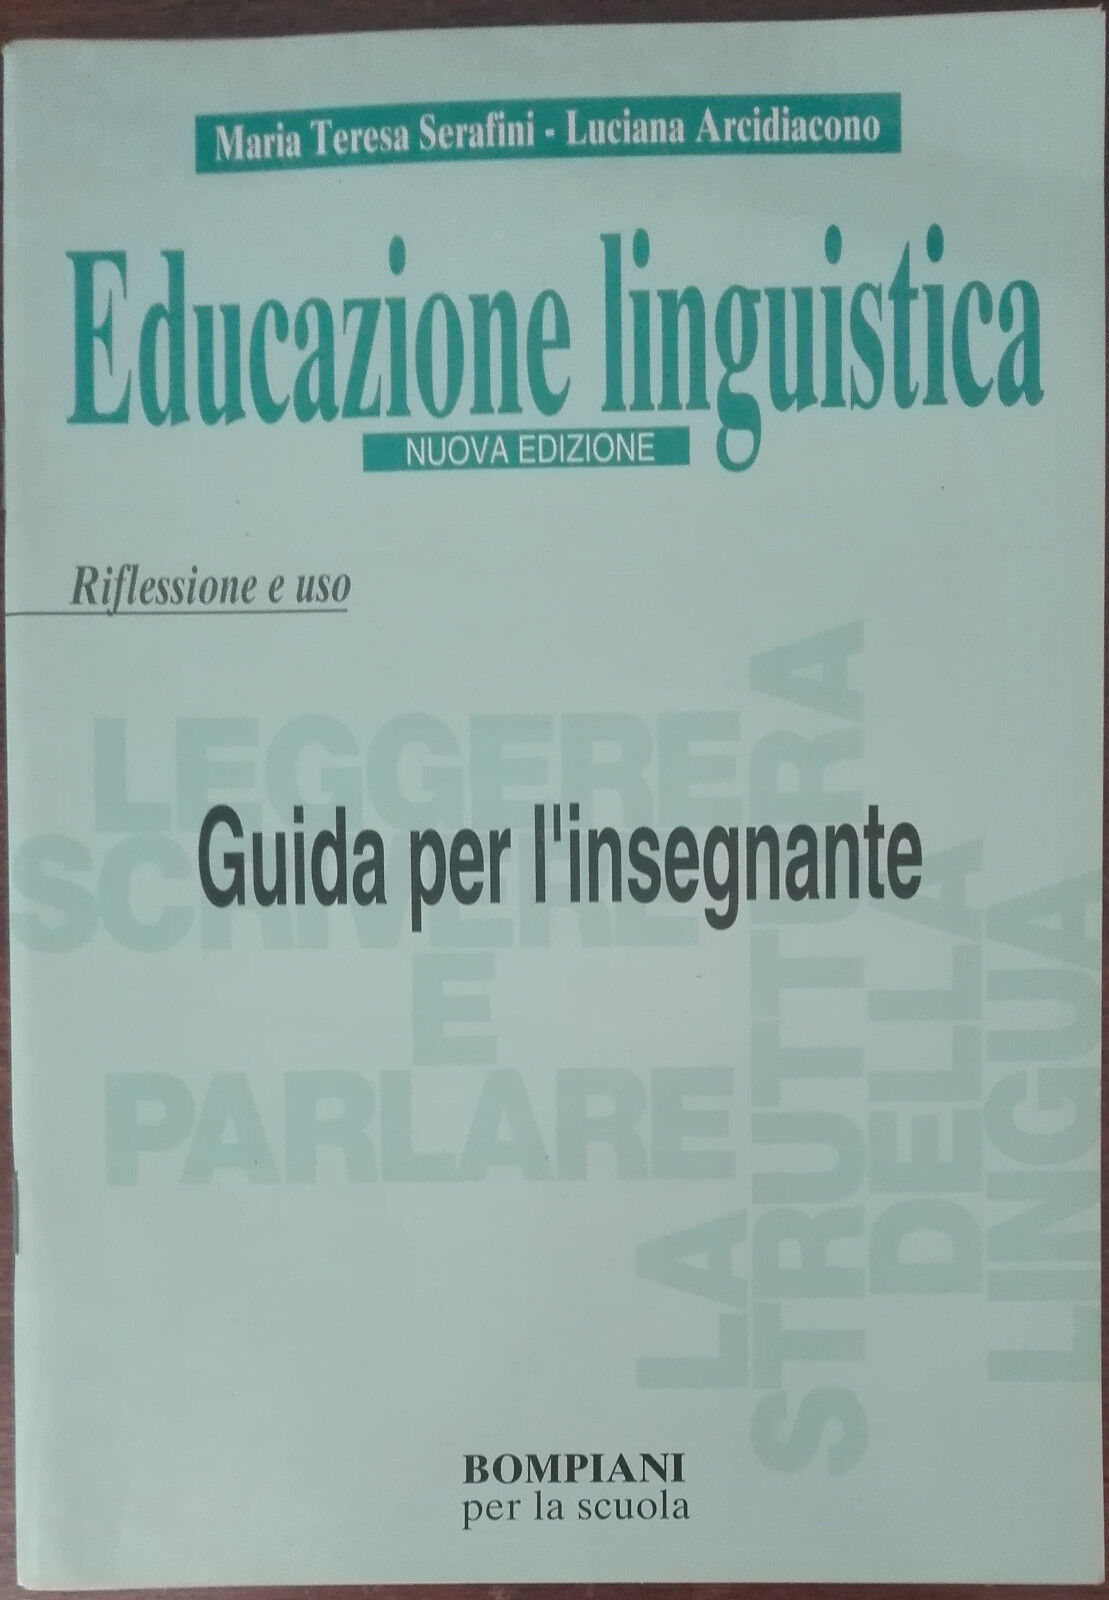 Educazione linguistica-Maria Teresa Serafini,Luciana Arcidiacono-Bompiani,1997-A